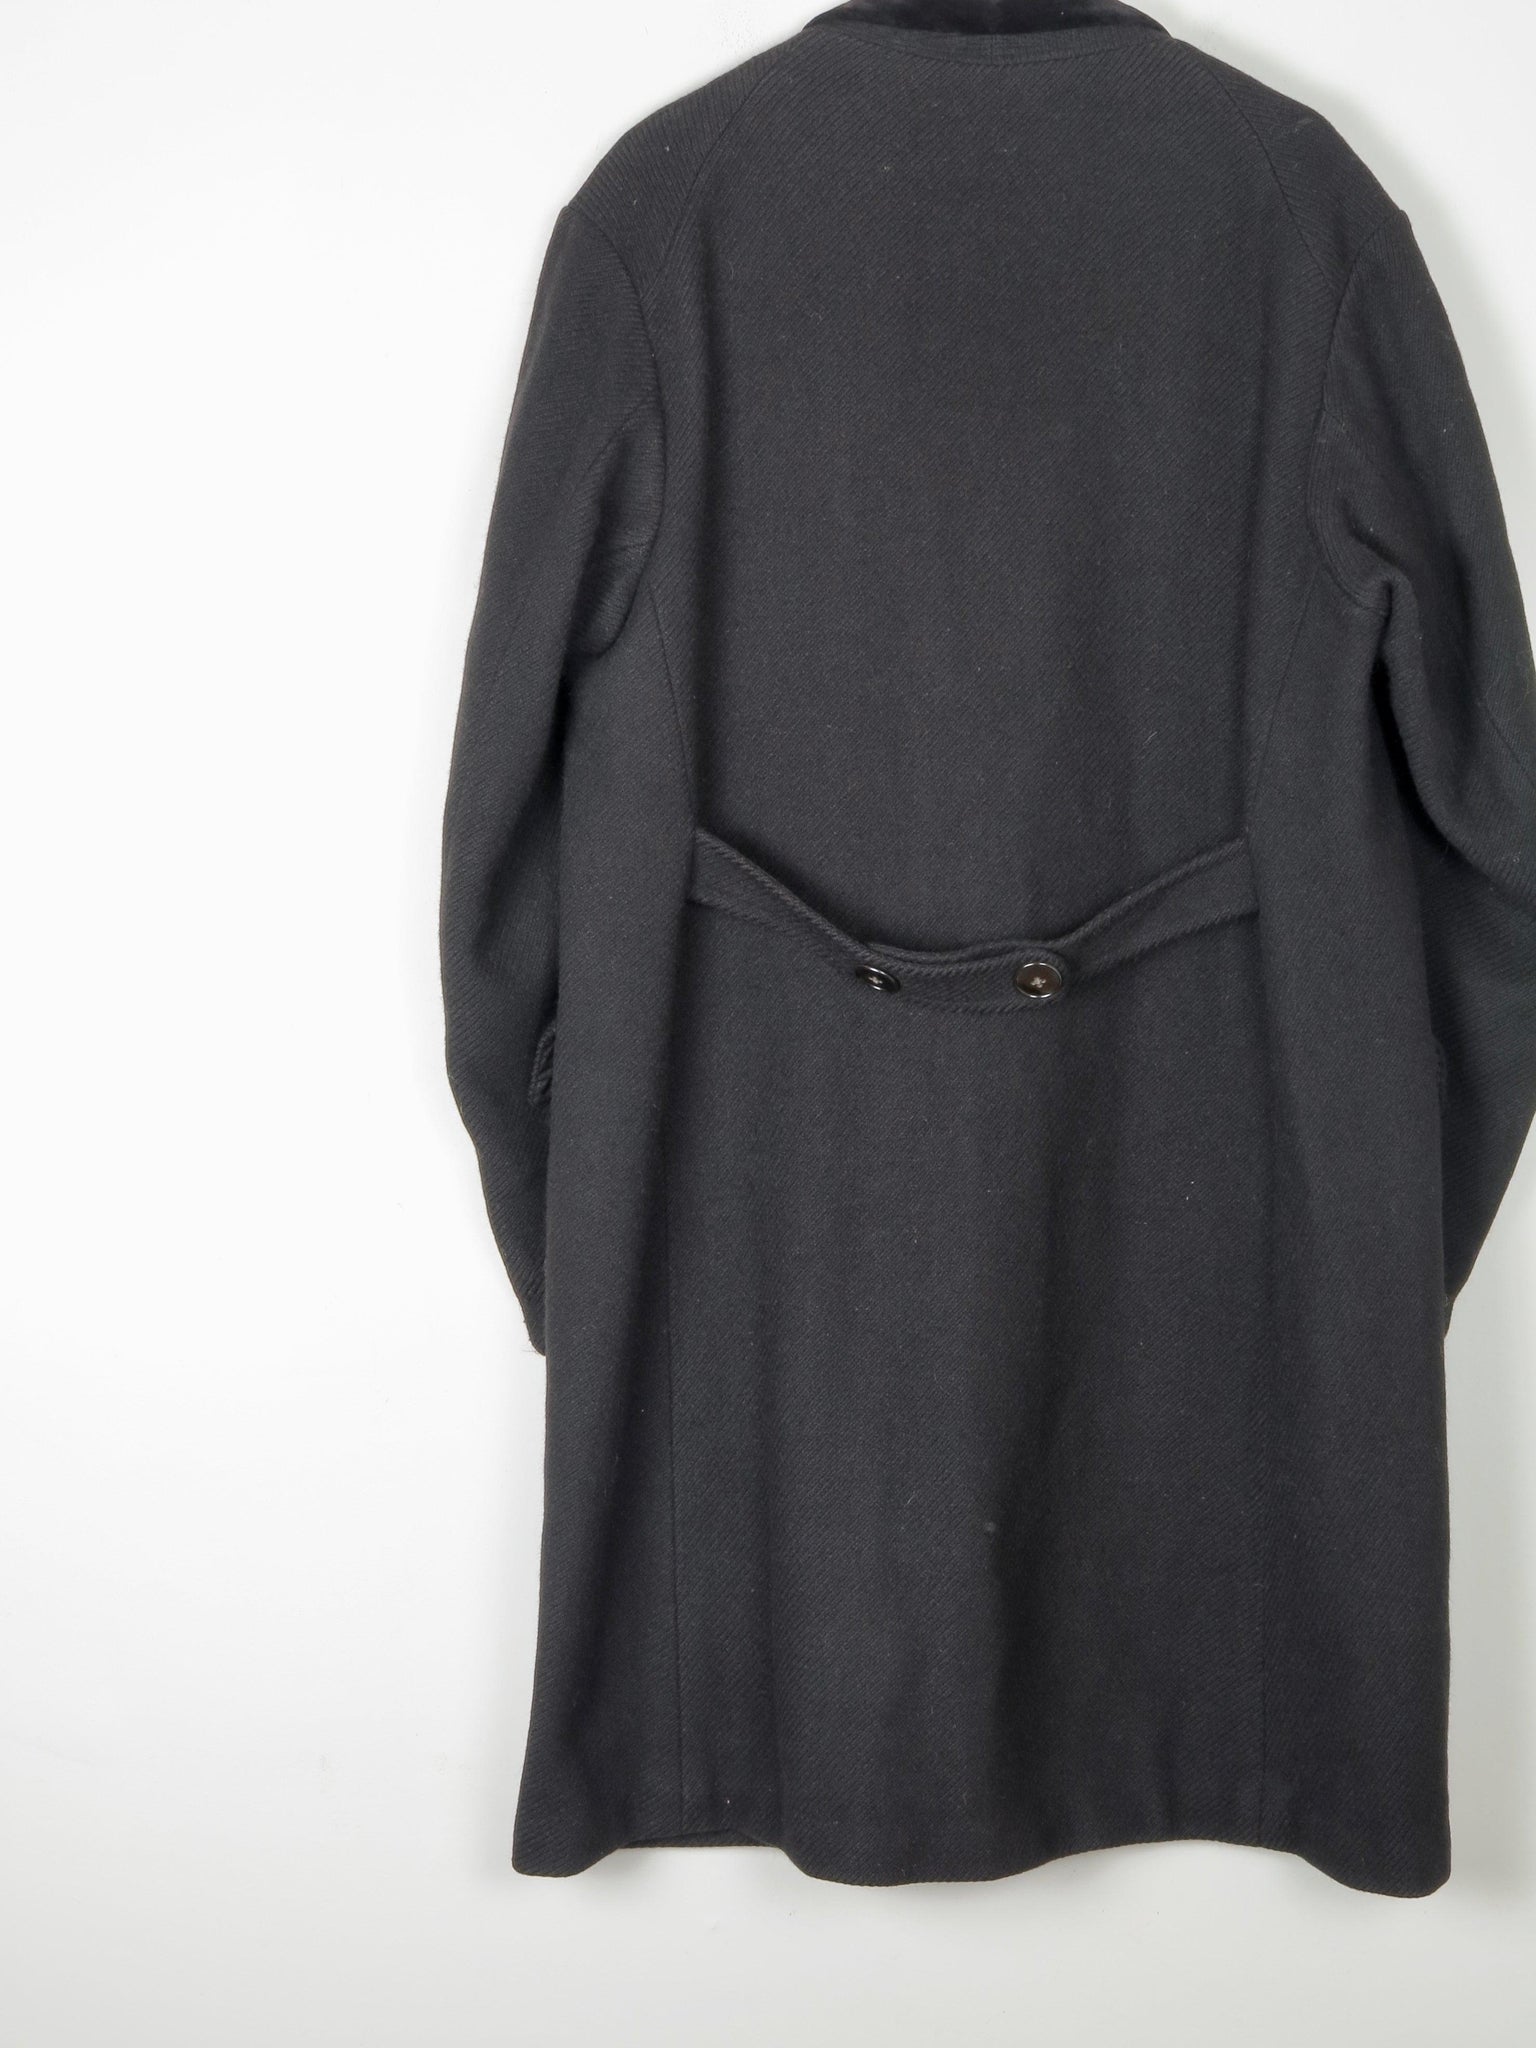 Men's Vintage Black Wool Coat With Velvet Collar 1940s 44"/Large - The Harlequin